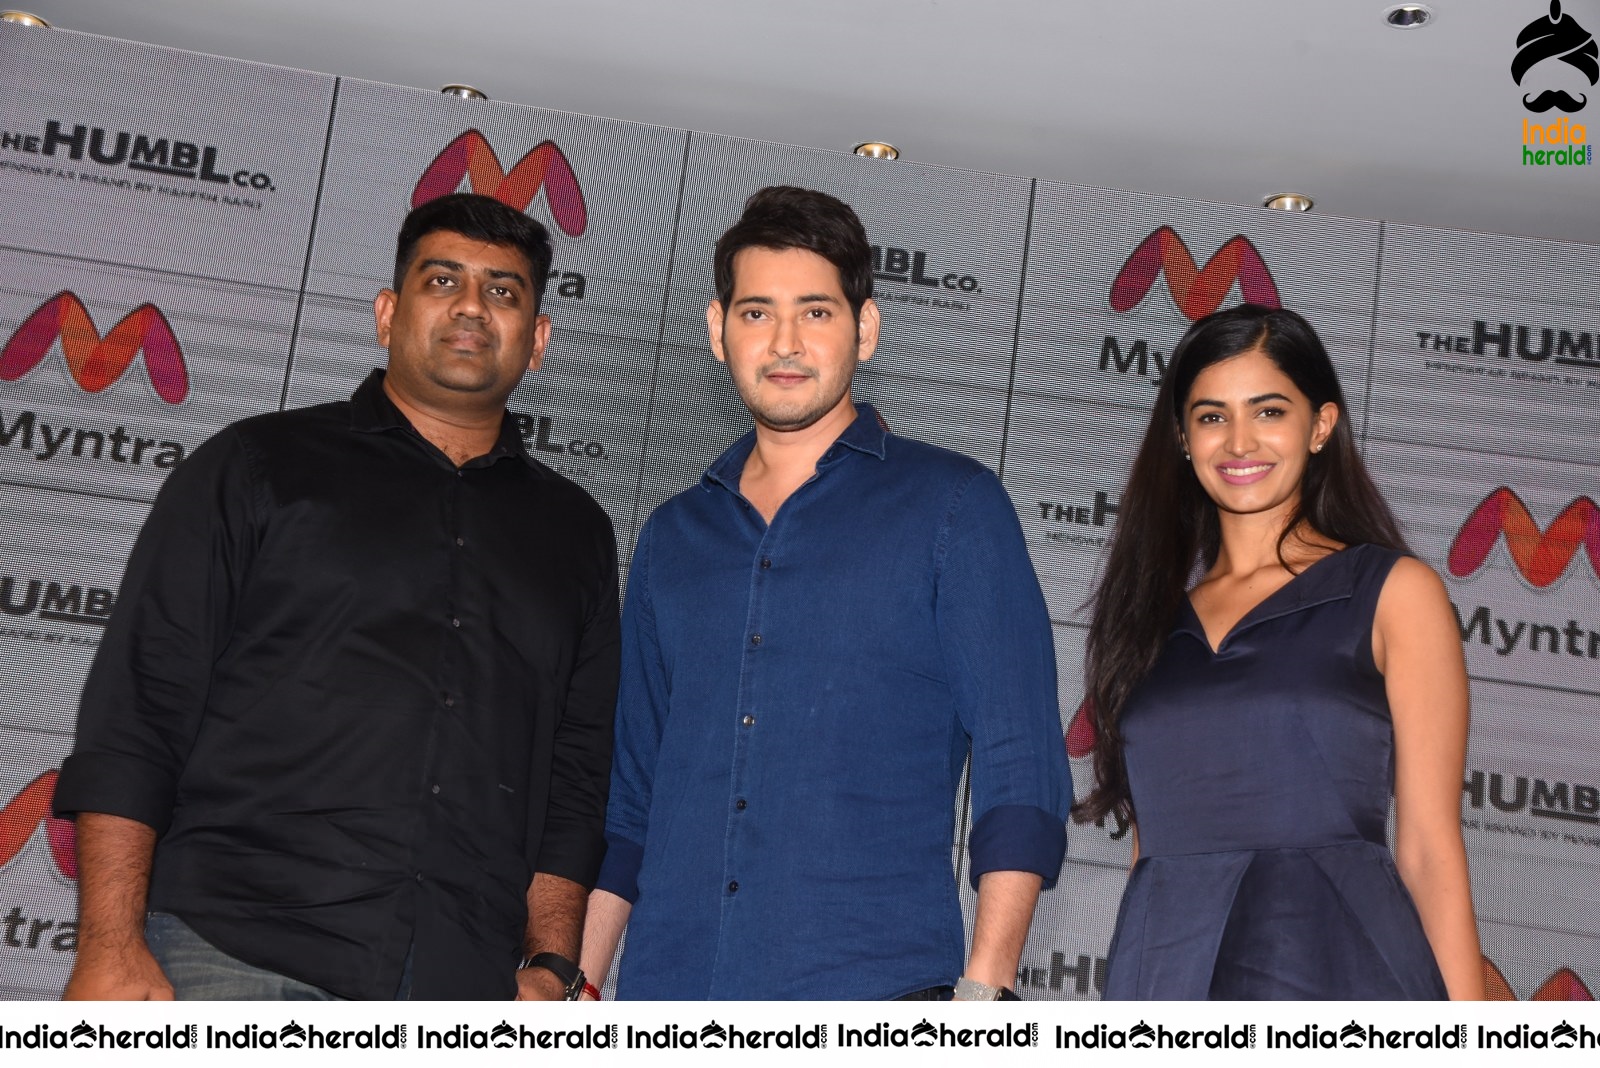 Mahesh Babu Launches His Apparel Brand The Humbl co On Myntra Set 4